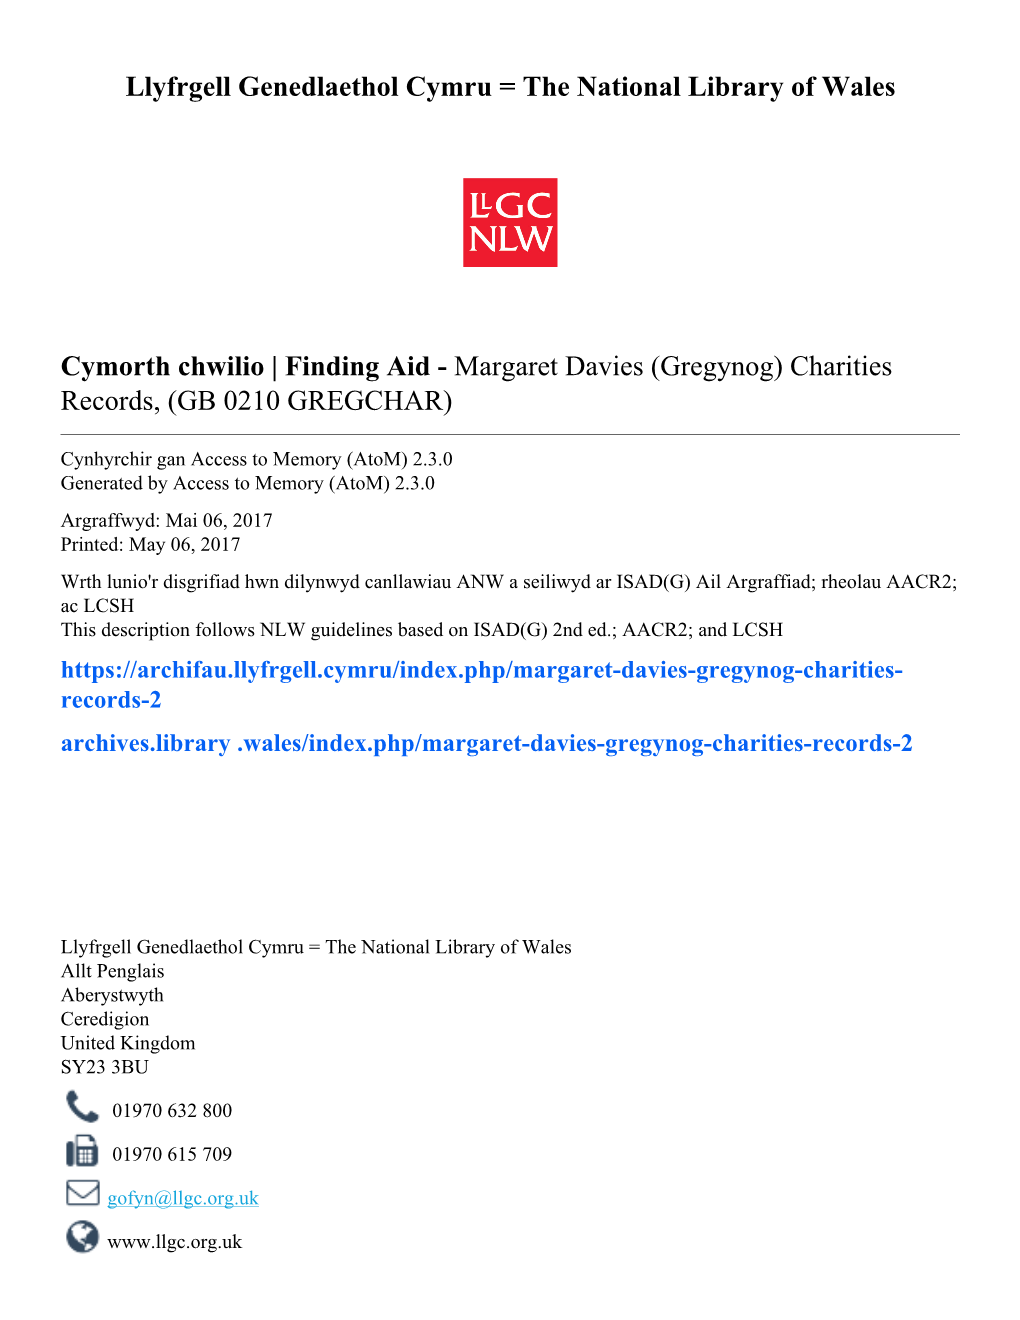 Margaret Davies (Gregynog) Charities Records, (GB 0210 GREGCHAR)